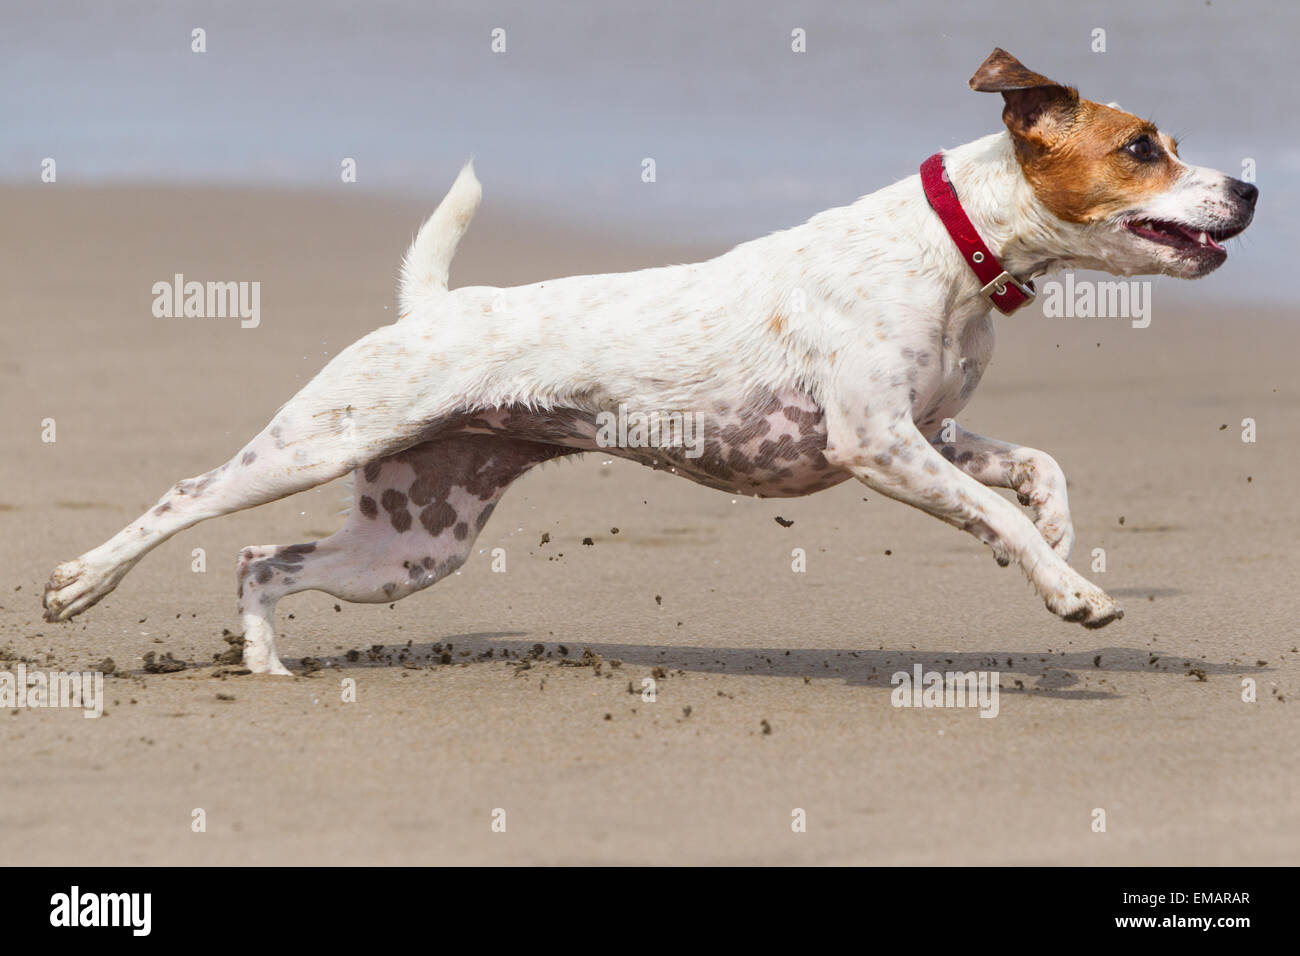 Happy Dog Run At Full Sped On The Beach Stock Photo